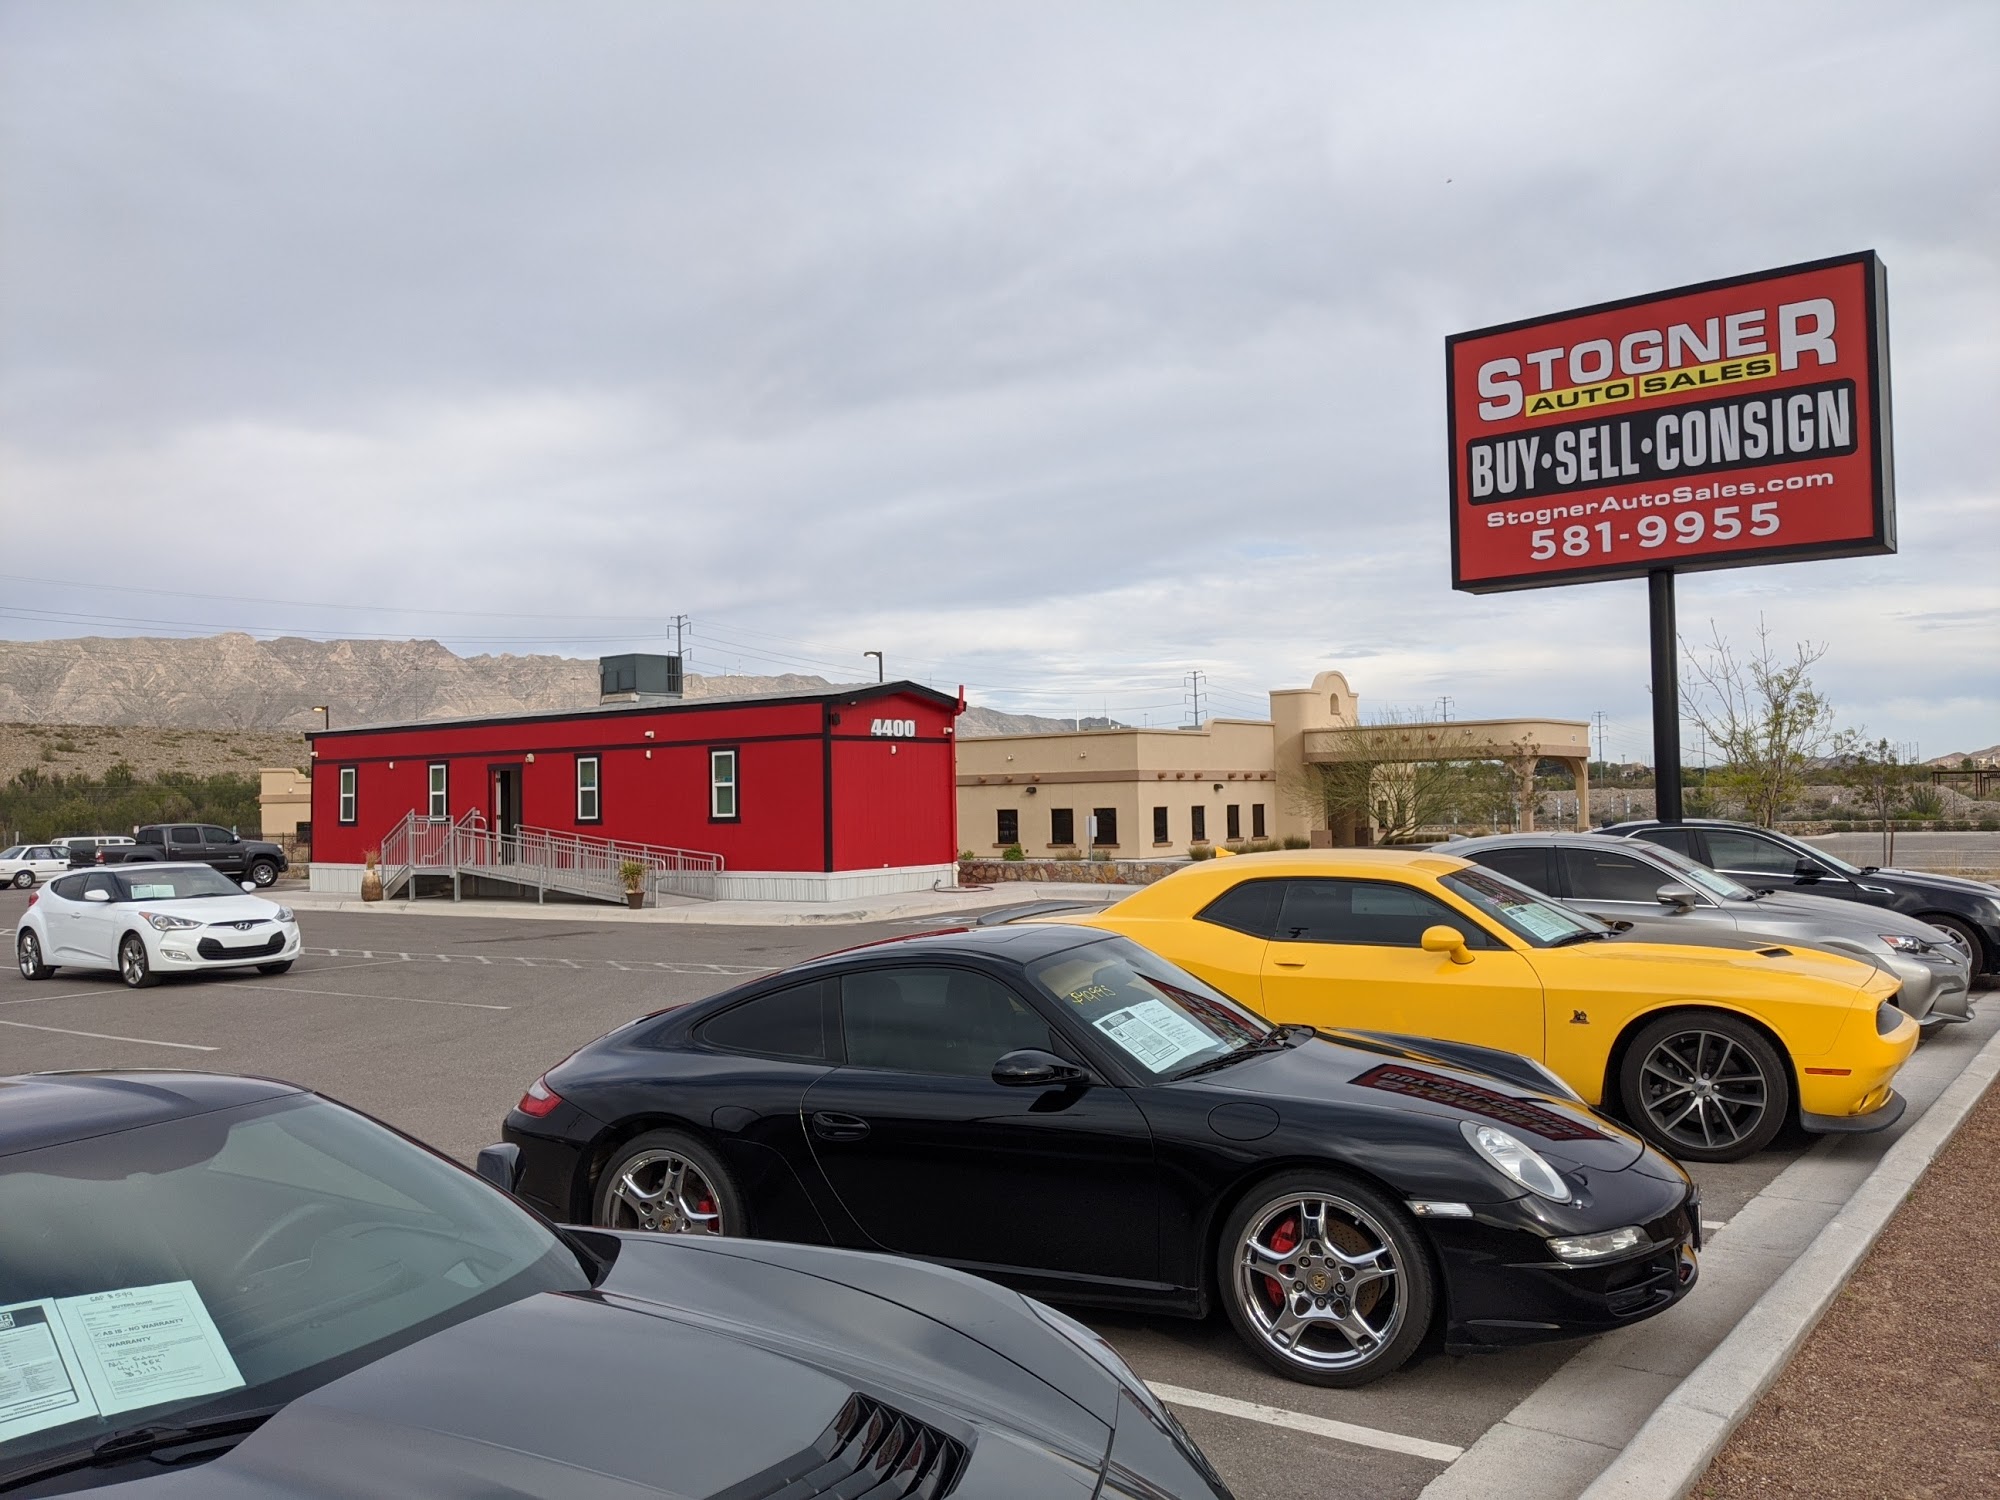 Stogner Auto Sales